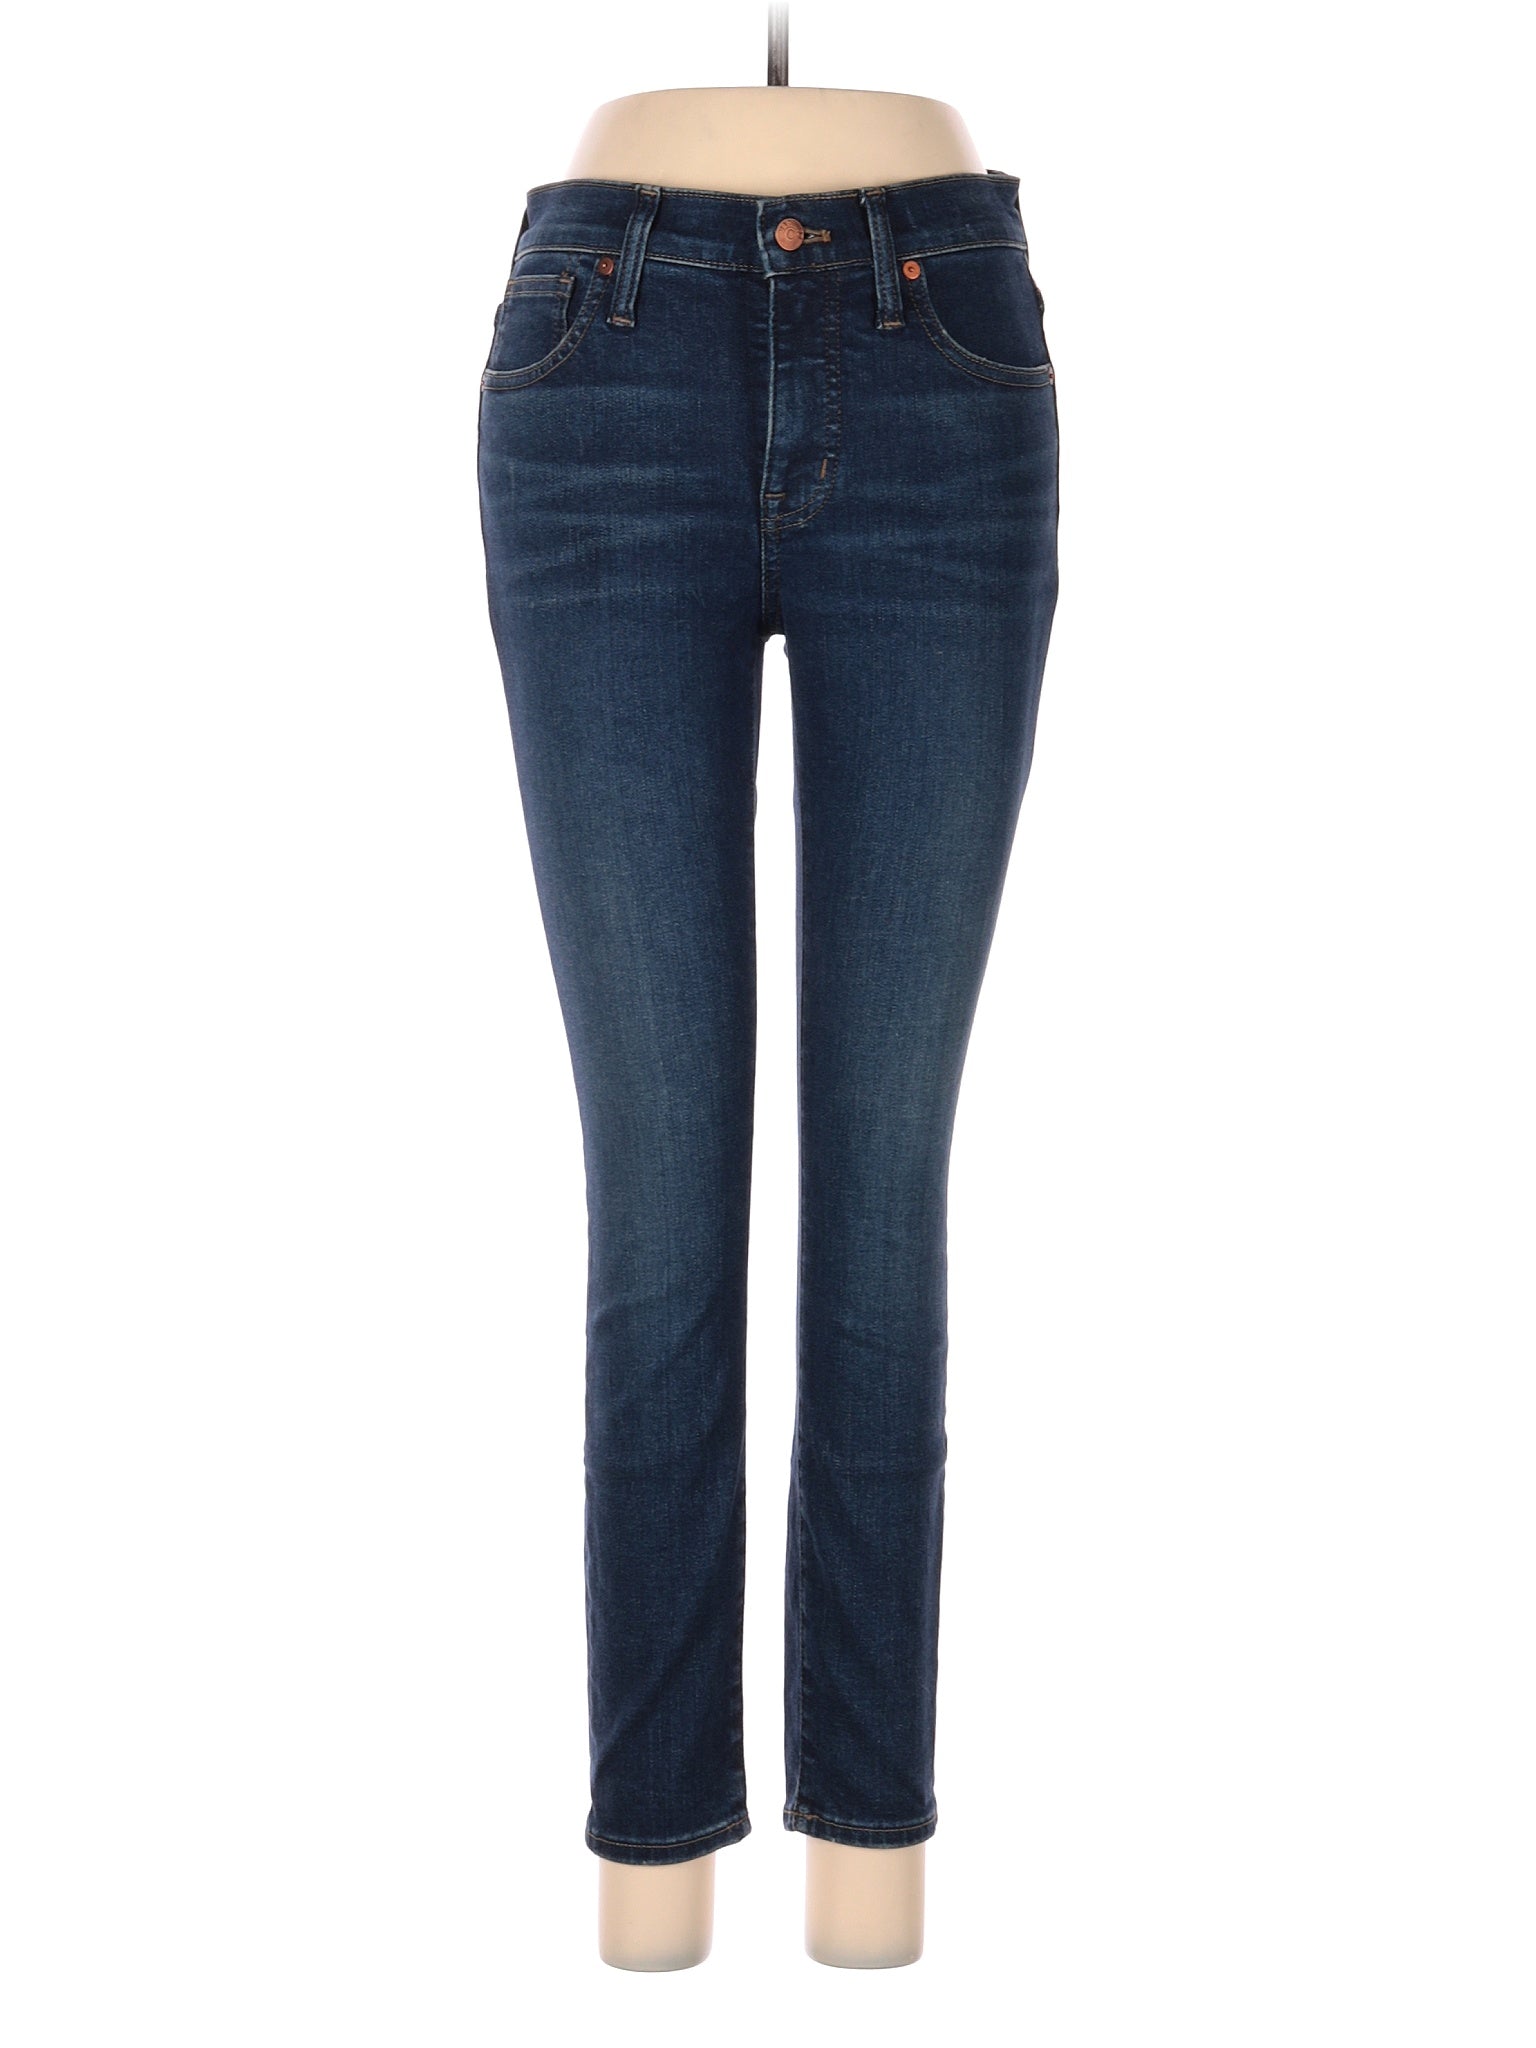 High-Rise Skinny Petite 9" Mid-Rise Skinny Jeans In Skillman Wash in Dark Wash waist size - 26 P